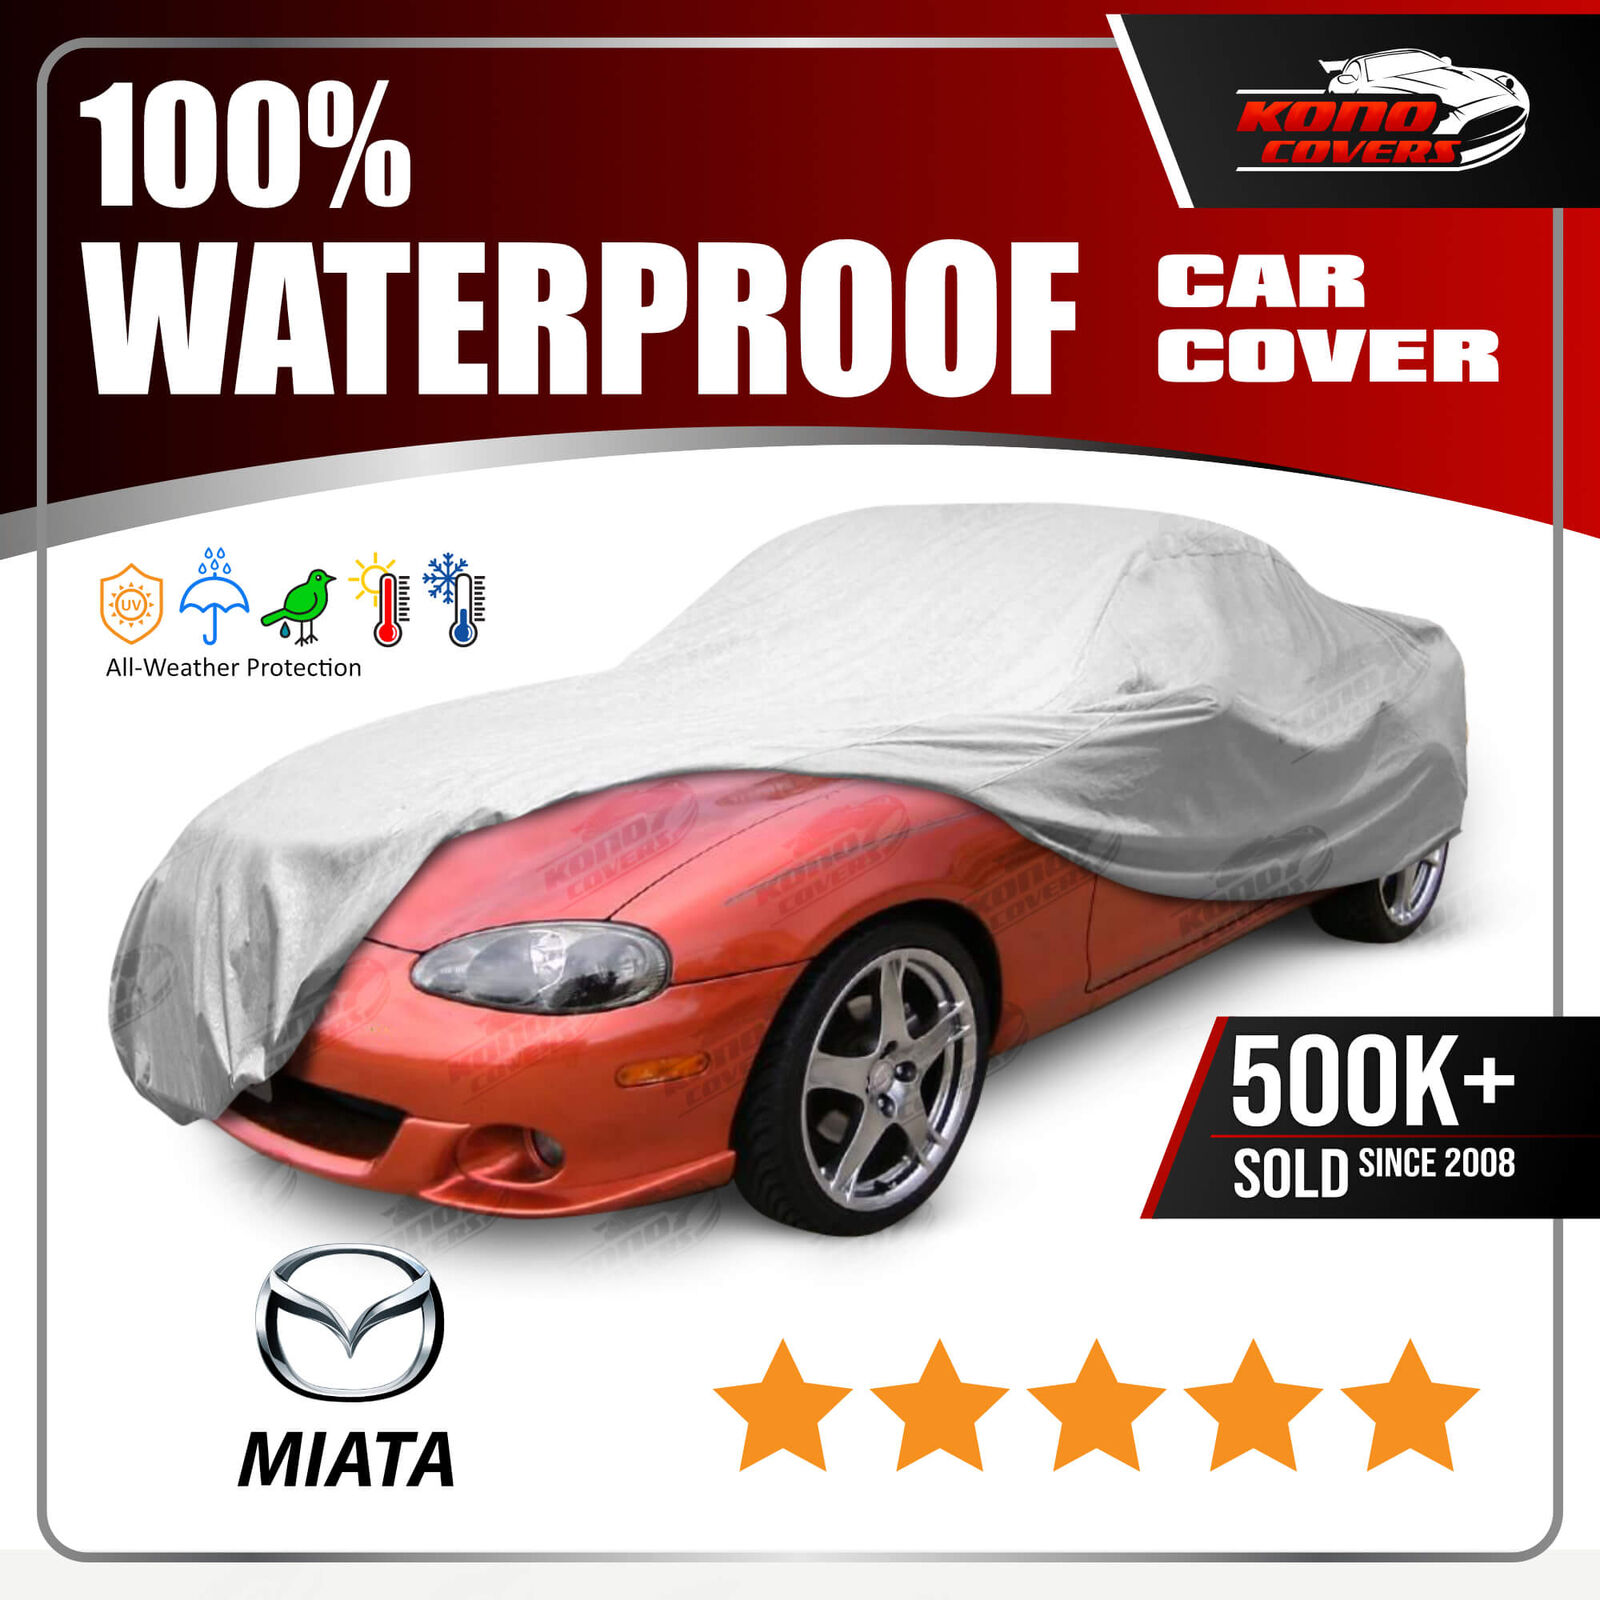 MAZDA MIATA Roadster 1998-2005 CAR COVER - 100% Waterproof 100% Breathable